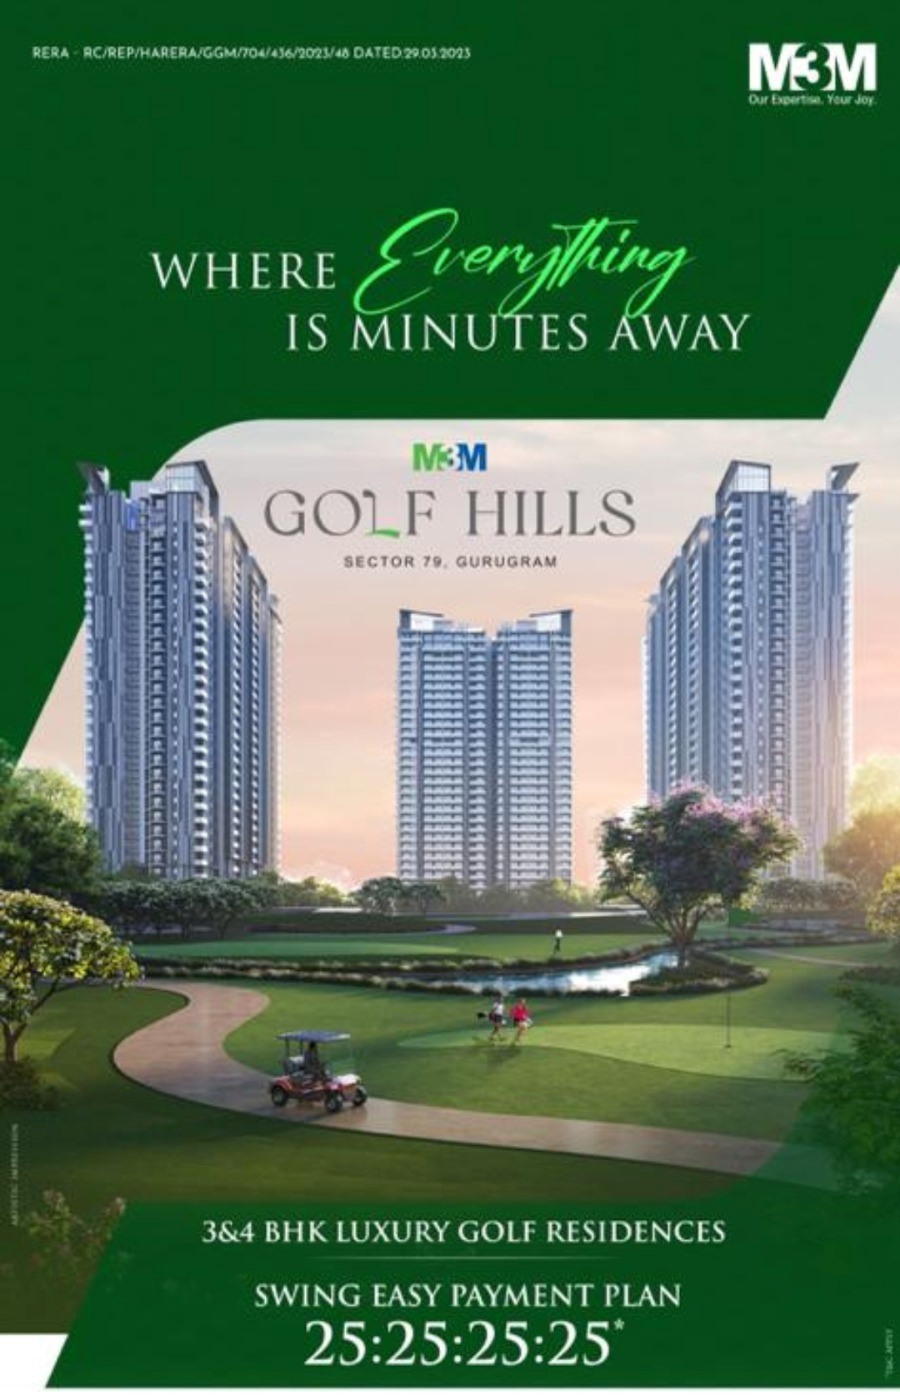 M3M Golf Hills Presenting 25:25:25:25 payment plan at Gurgaon Update